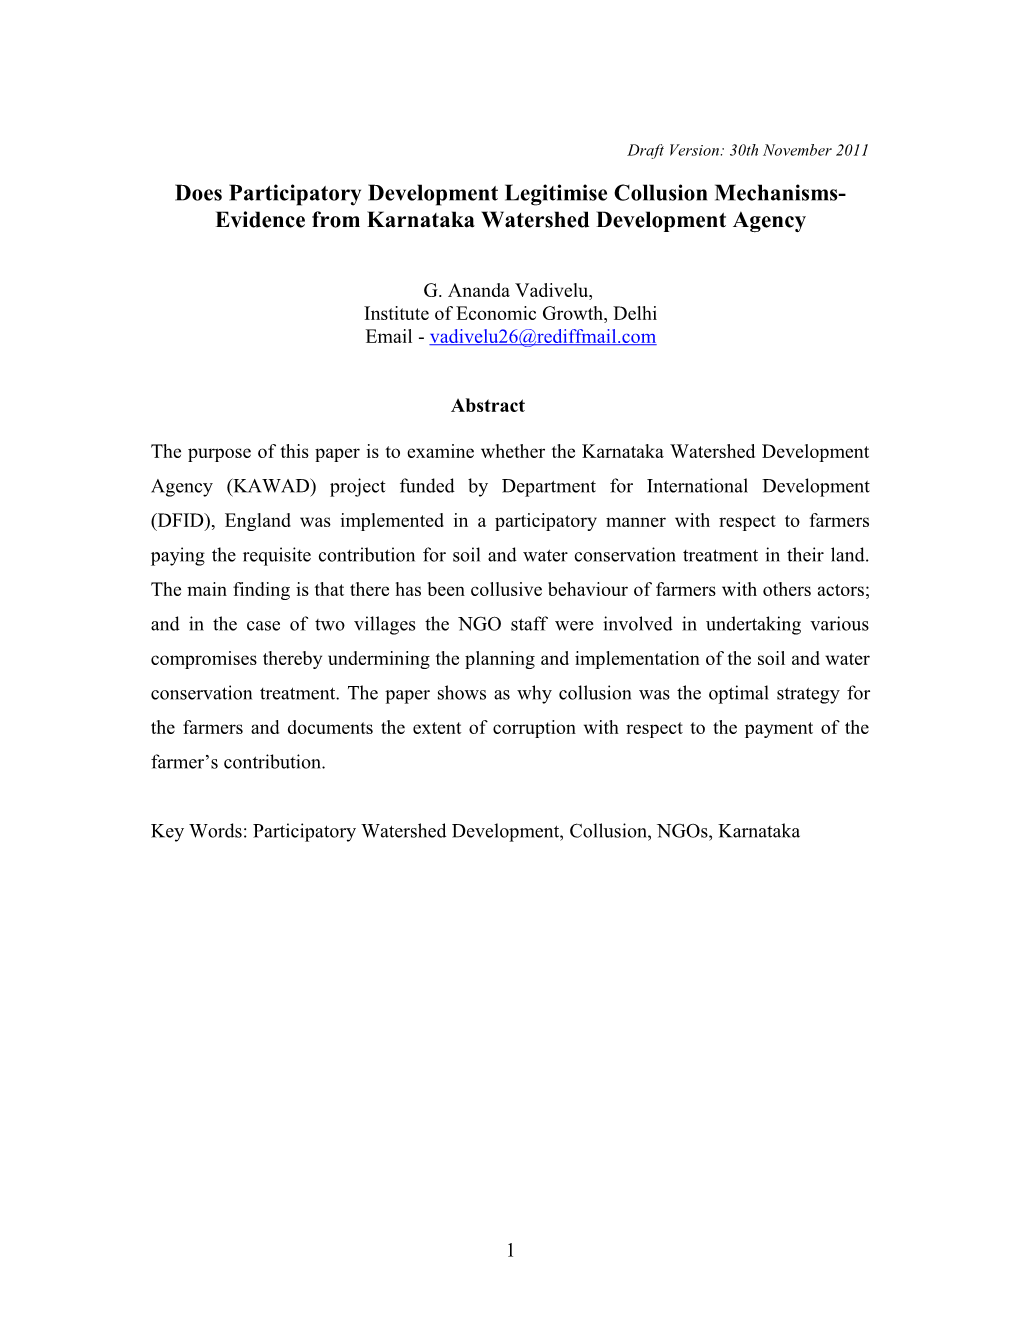 Title - Participatory Development Or Legitimising Collusion Mechanisms in KAWAD